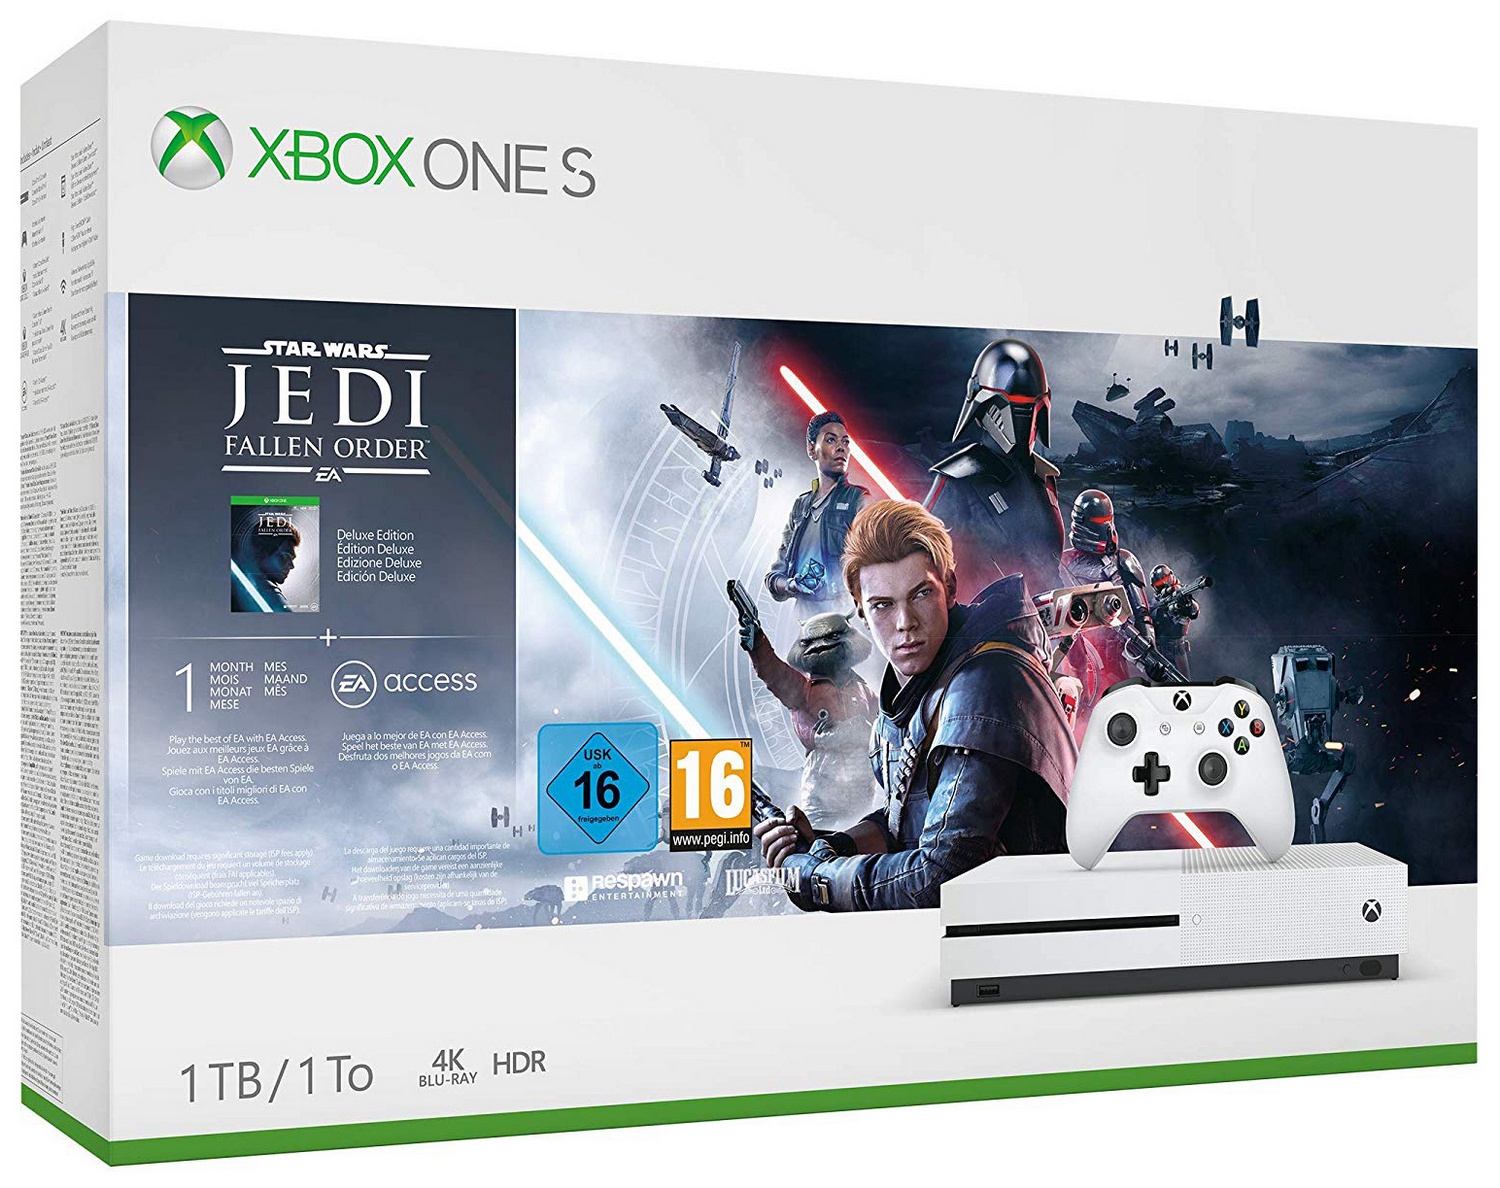 Xbox One S 1 TB - Star Wars Jedi: Fallen Order Digital Download Bundle